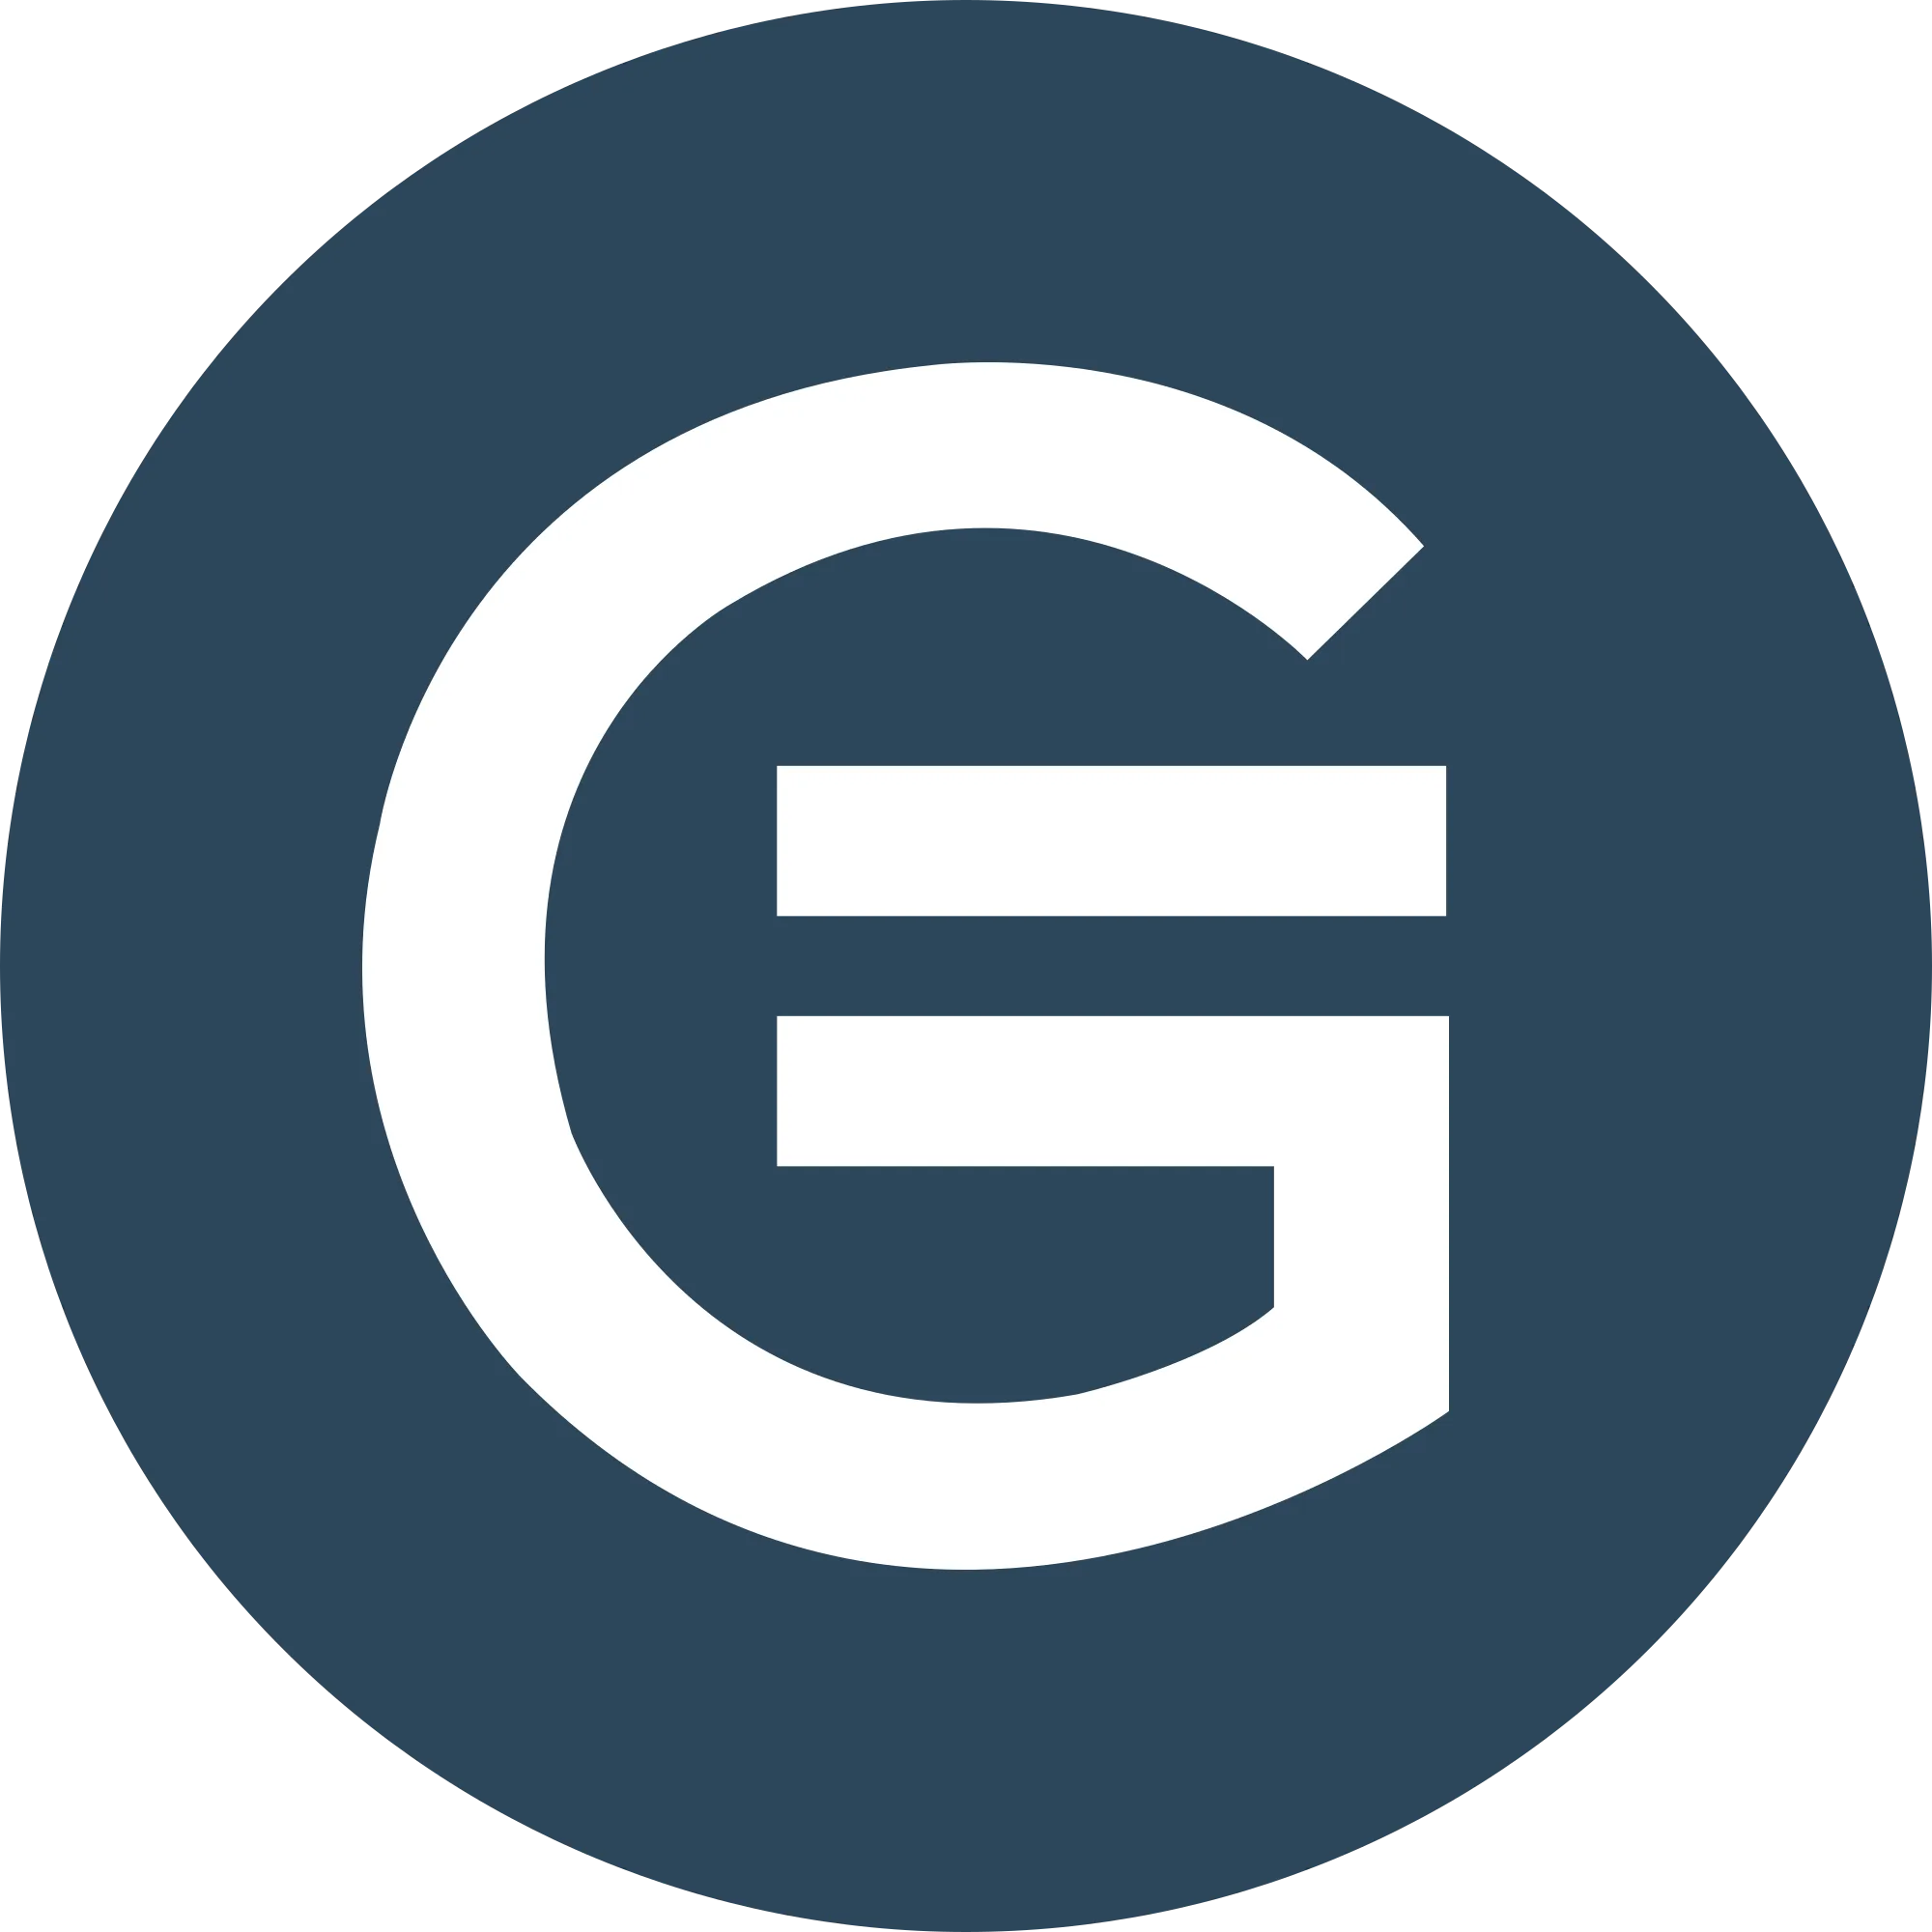 GameCredits (GAME) logo